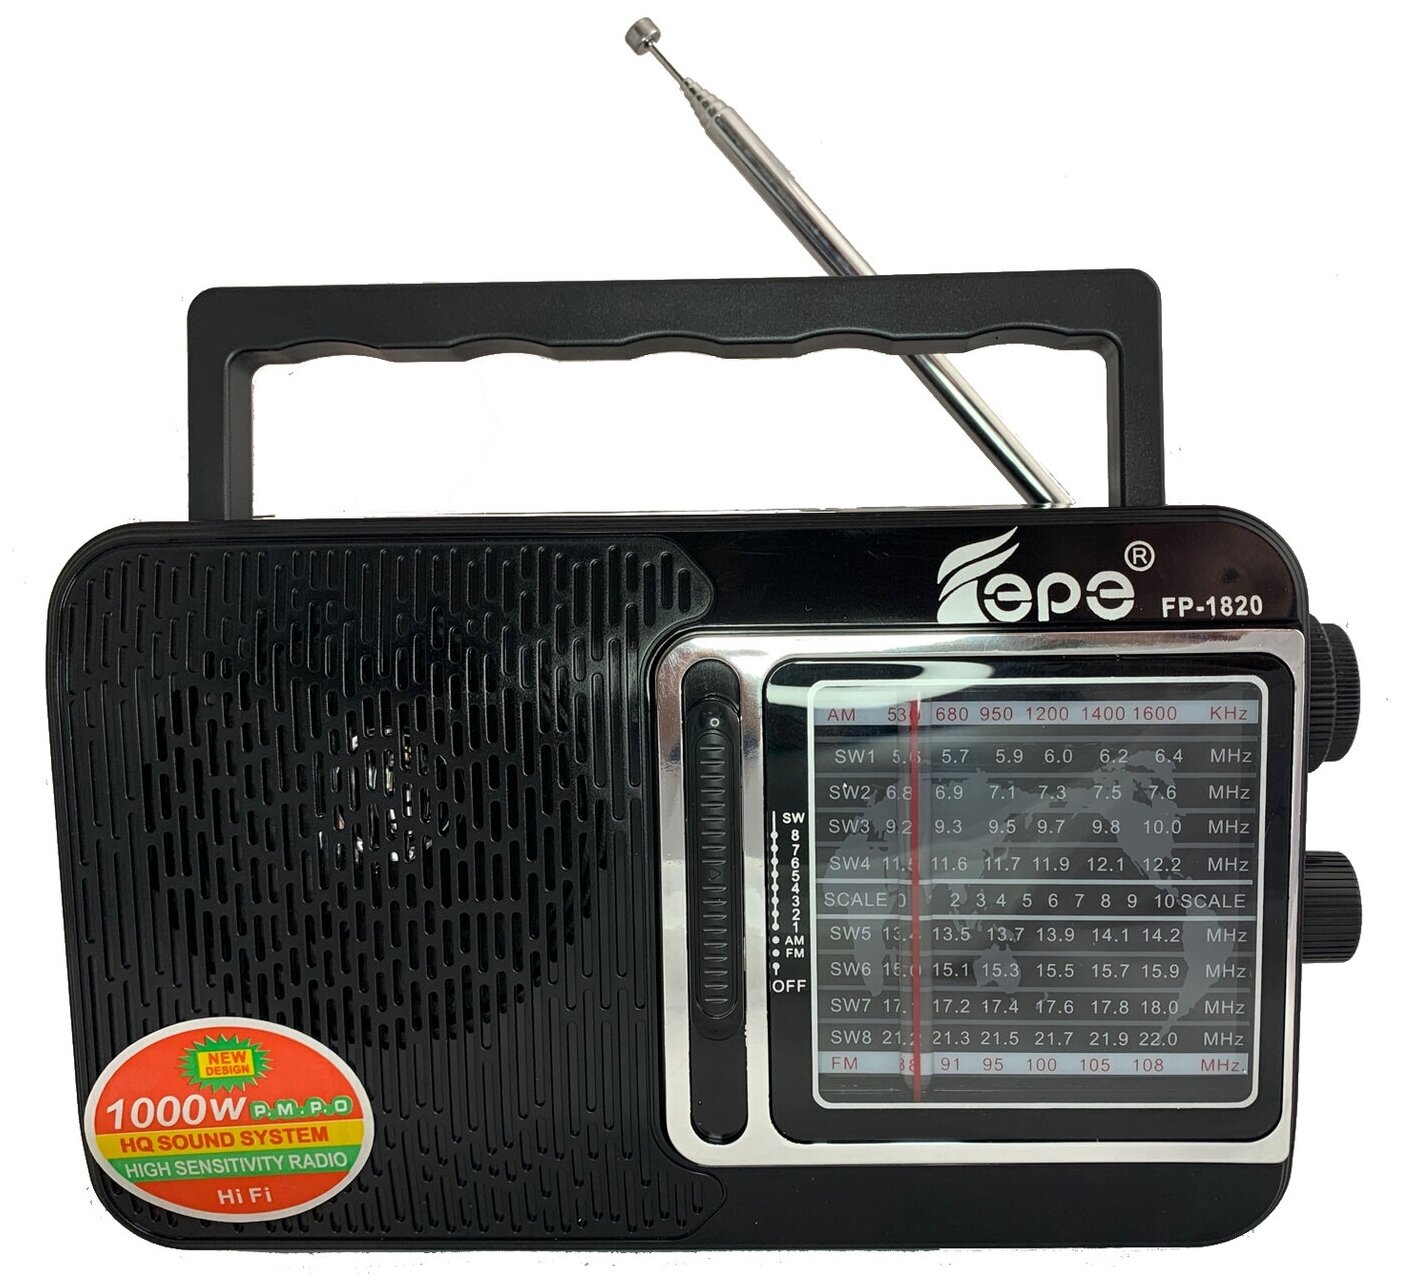 Fepe /FP-1820 Радиоприемник AM-FM-SW питание от сети 220В - Радио c MP3 плеером USB